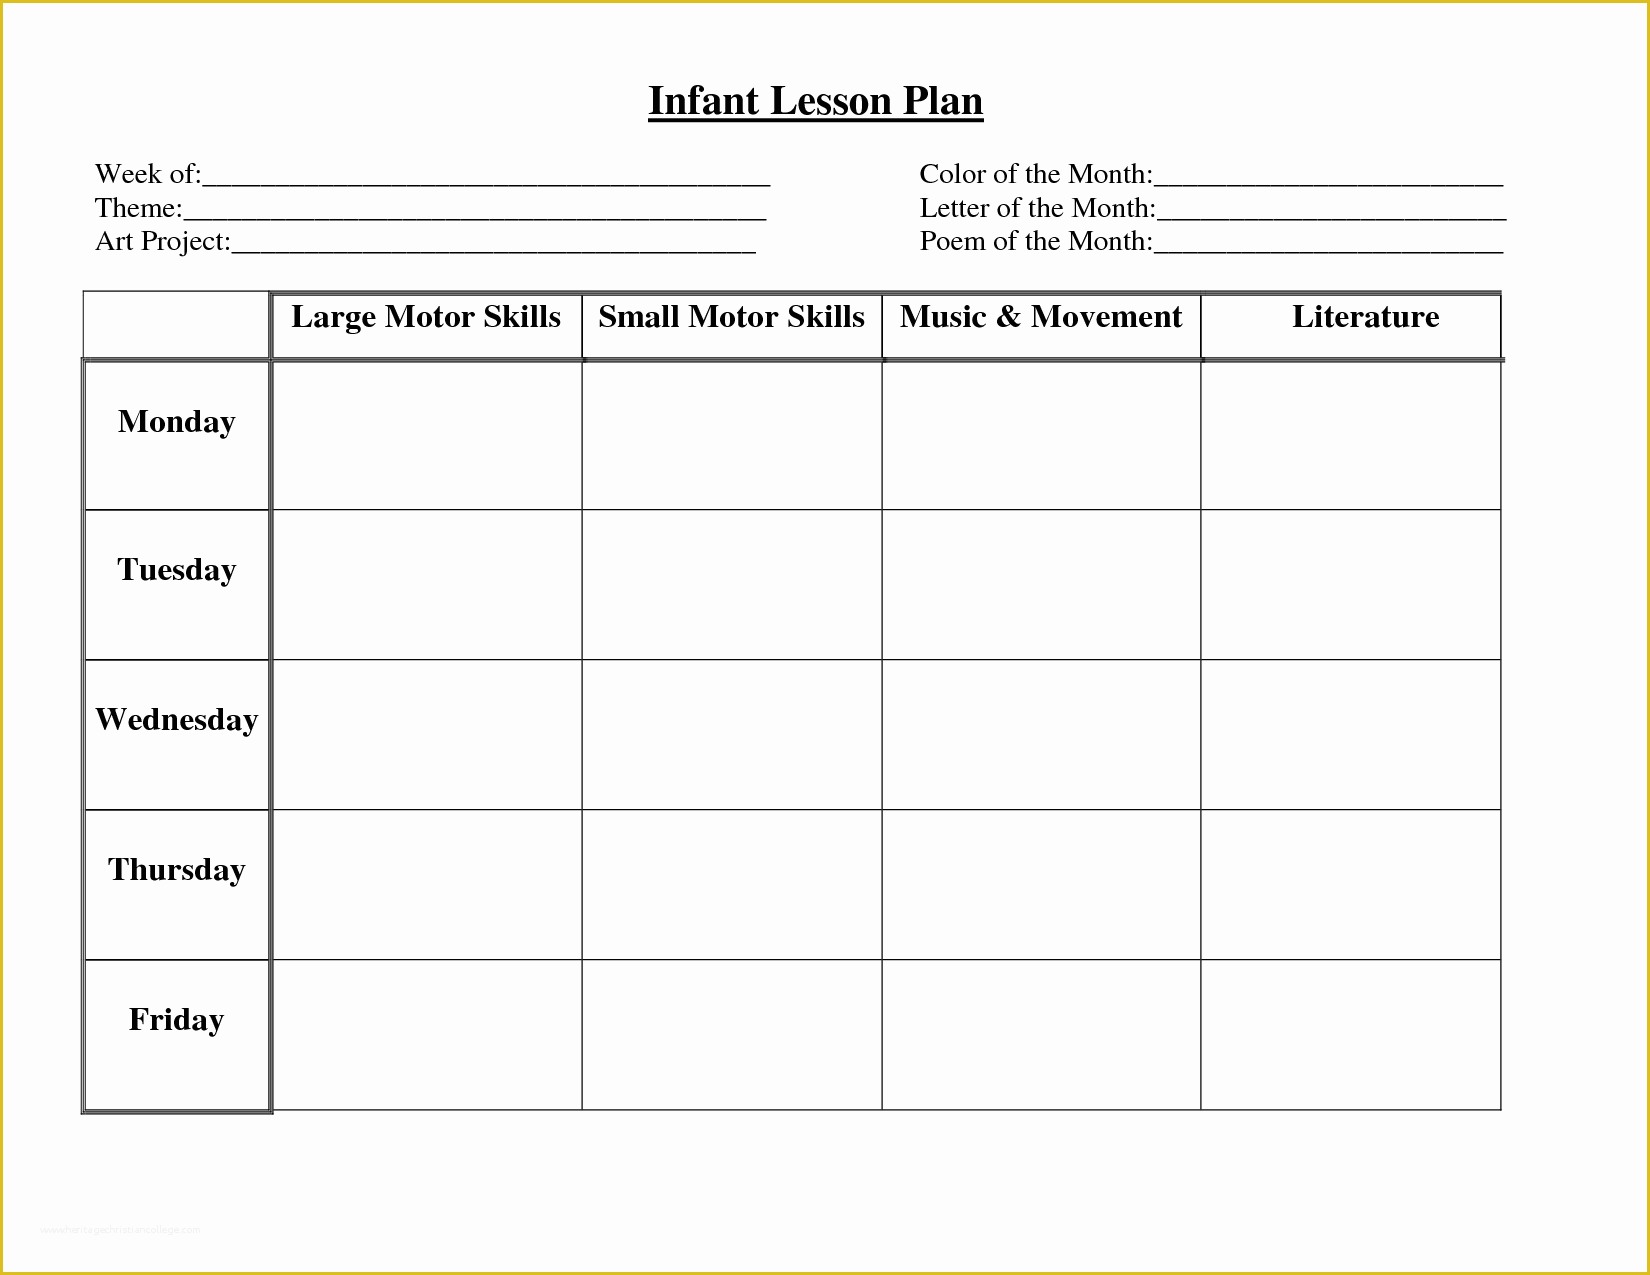 Free Blank Preschool Lesson Plan Templates Of Infant Blank Lesson Plan 